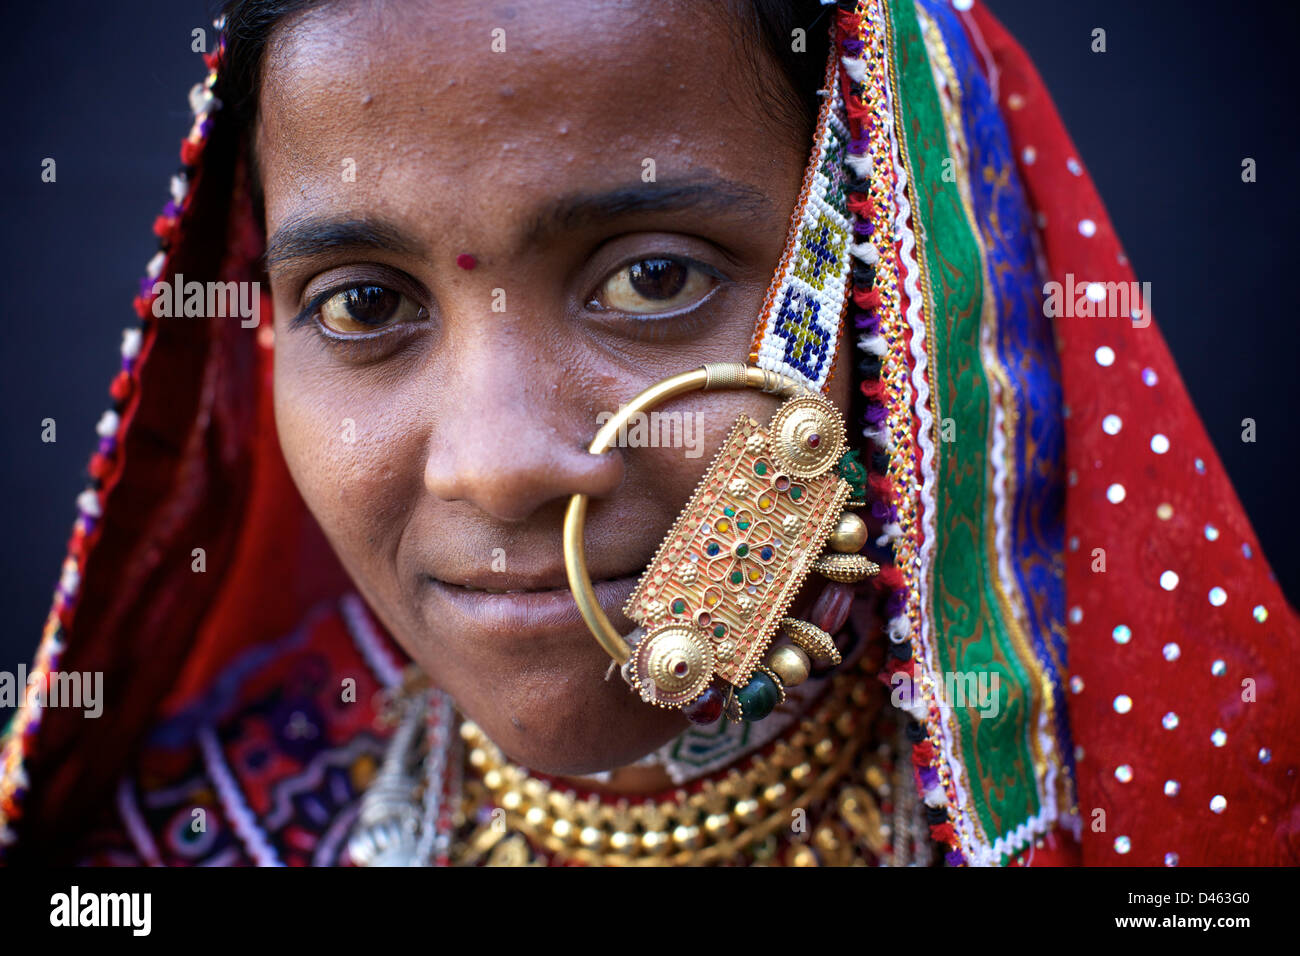 Girl from Harijan tribe. Stock Photo